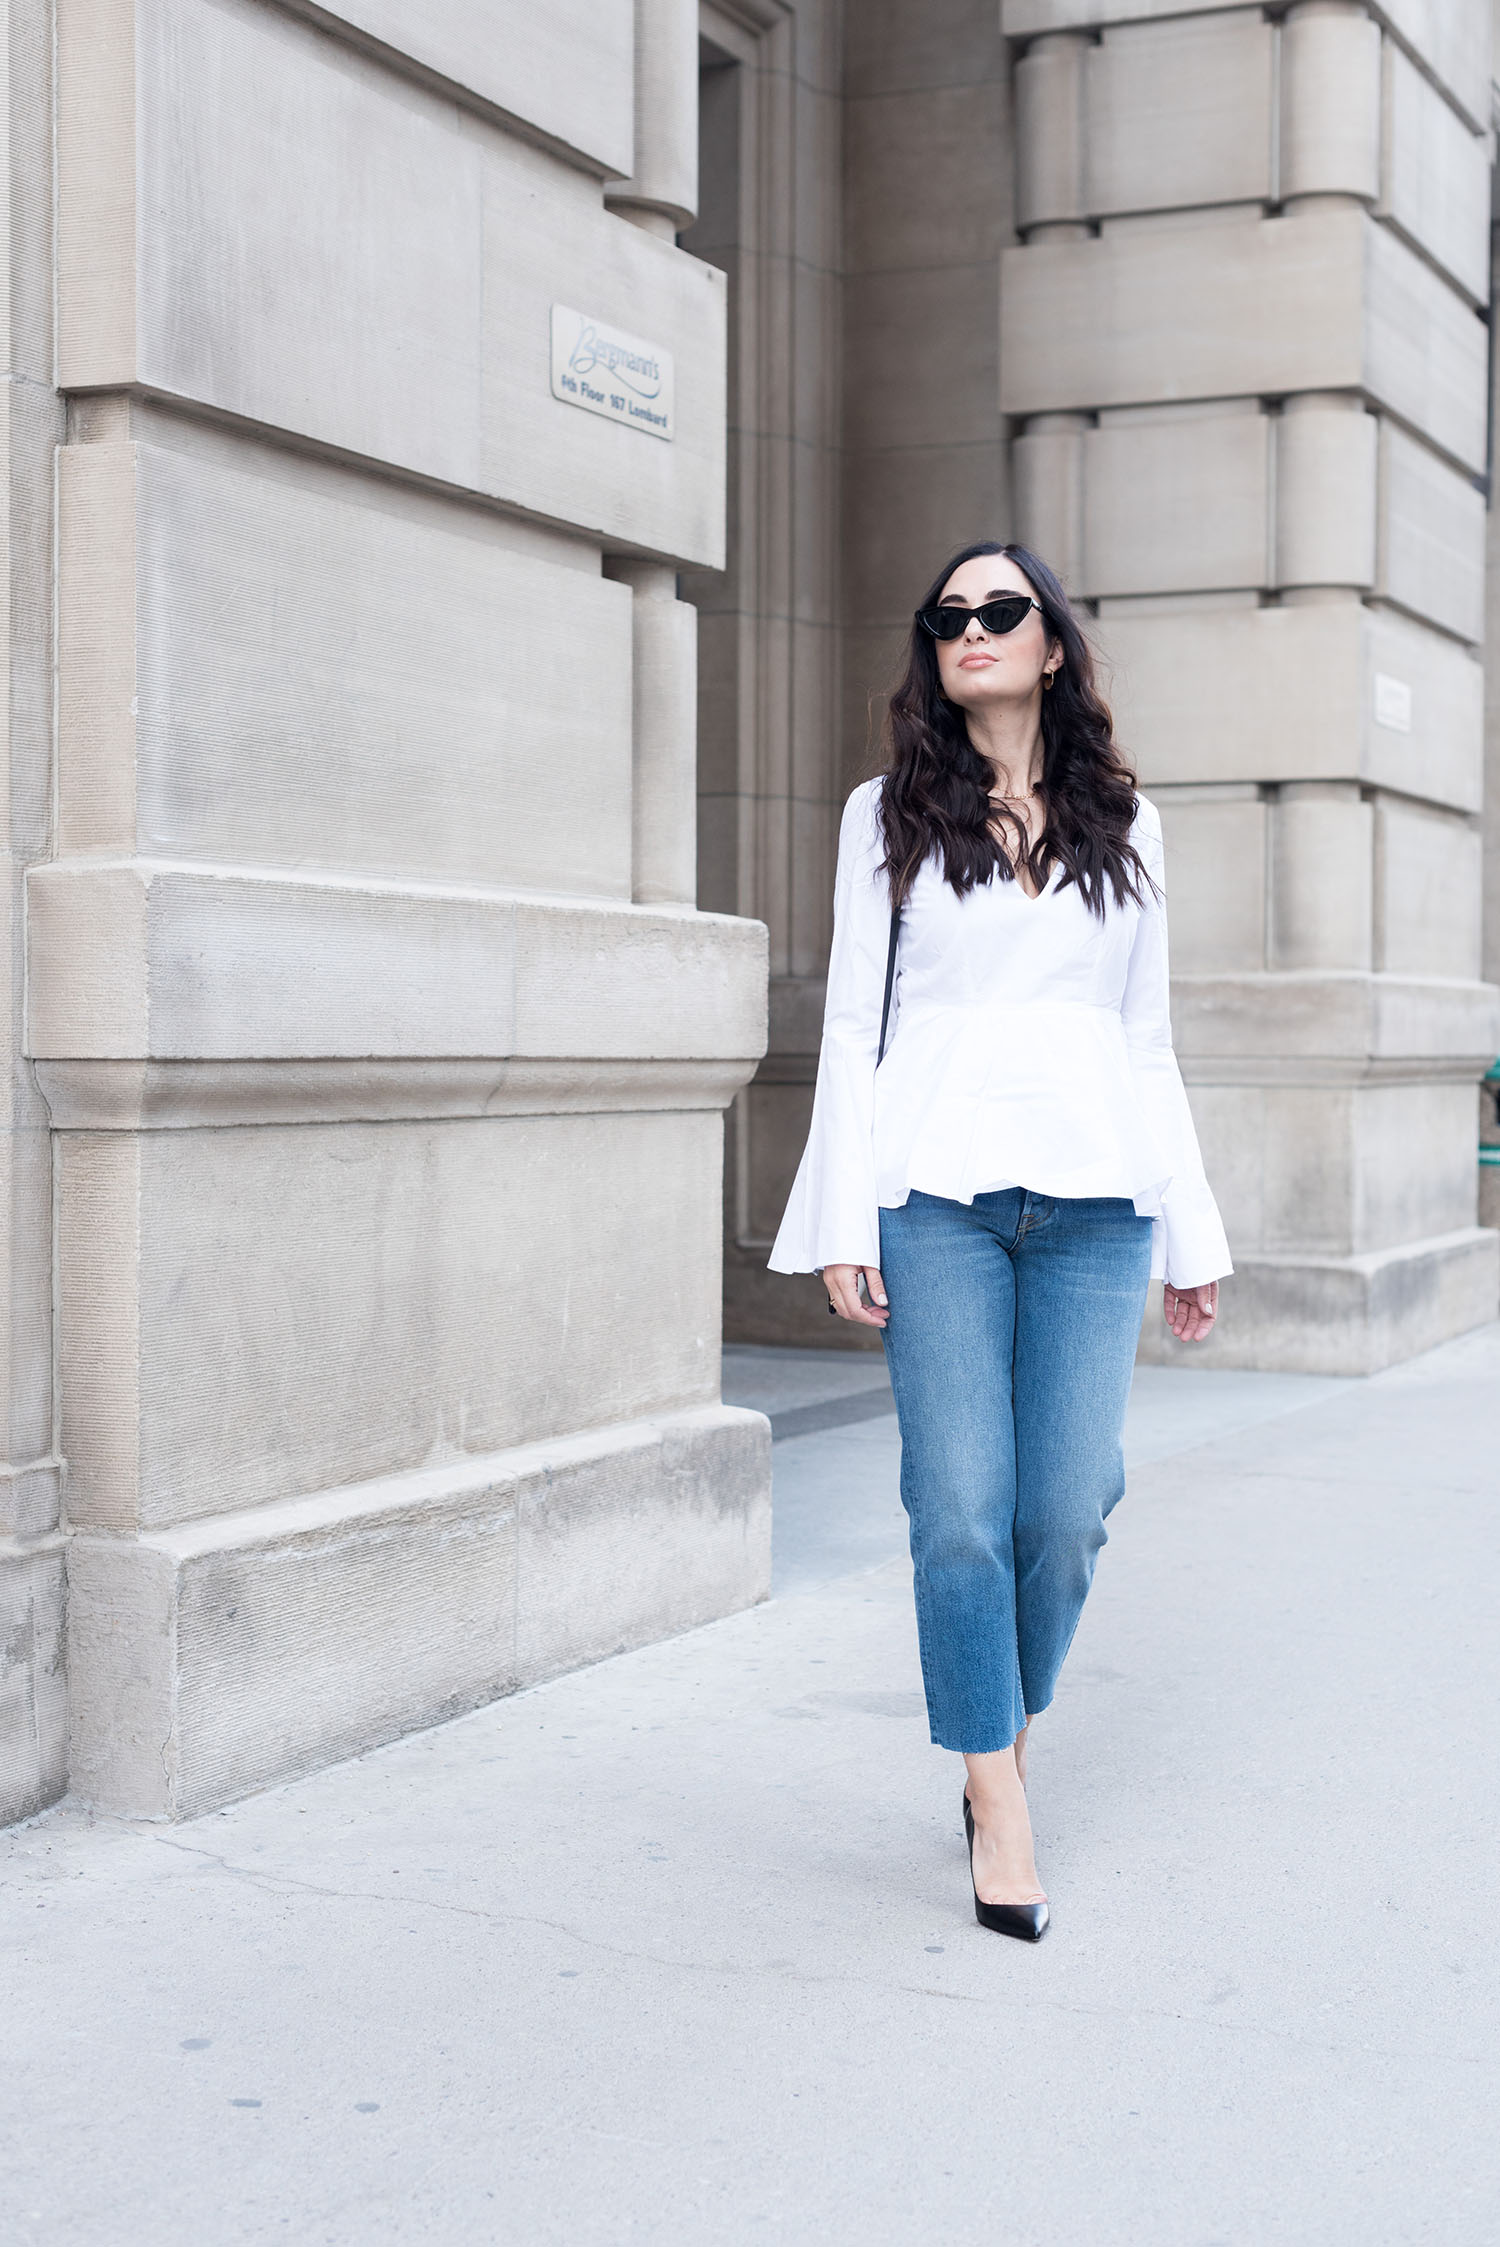 Fashion blogger Cee Fardoe of Coco & Vera walks outside the Grain Exchange in Winnipeg wearing a L'Academie blouse and Grlfrnd Helena jeans